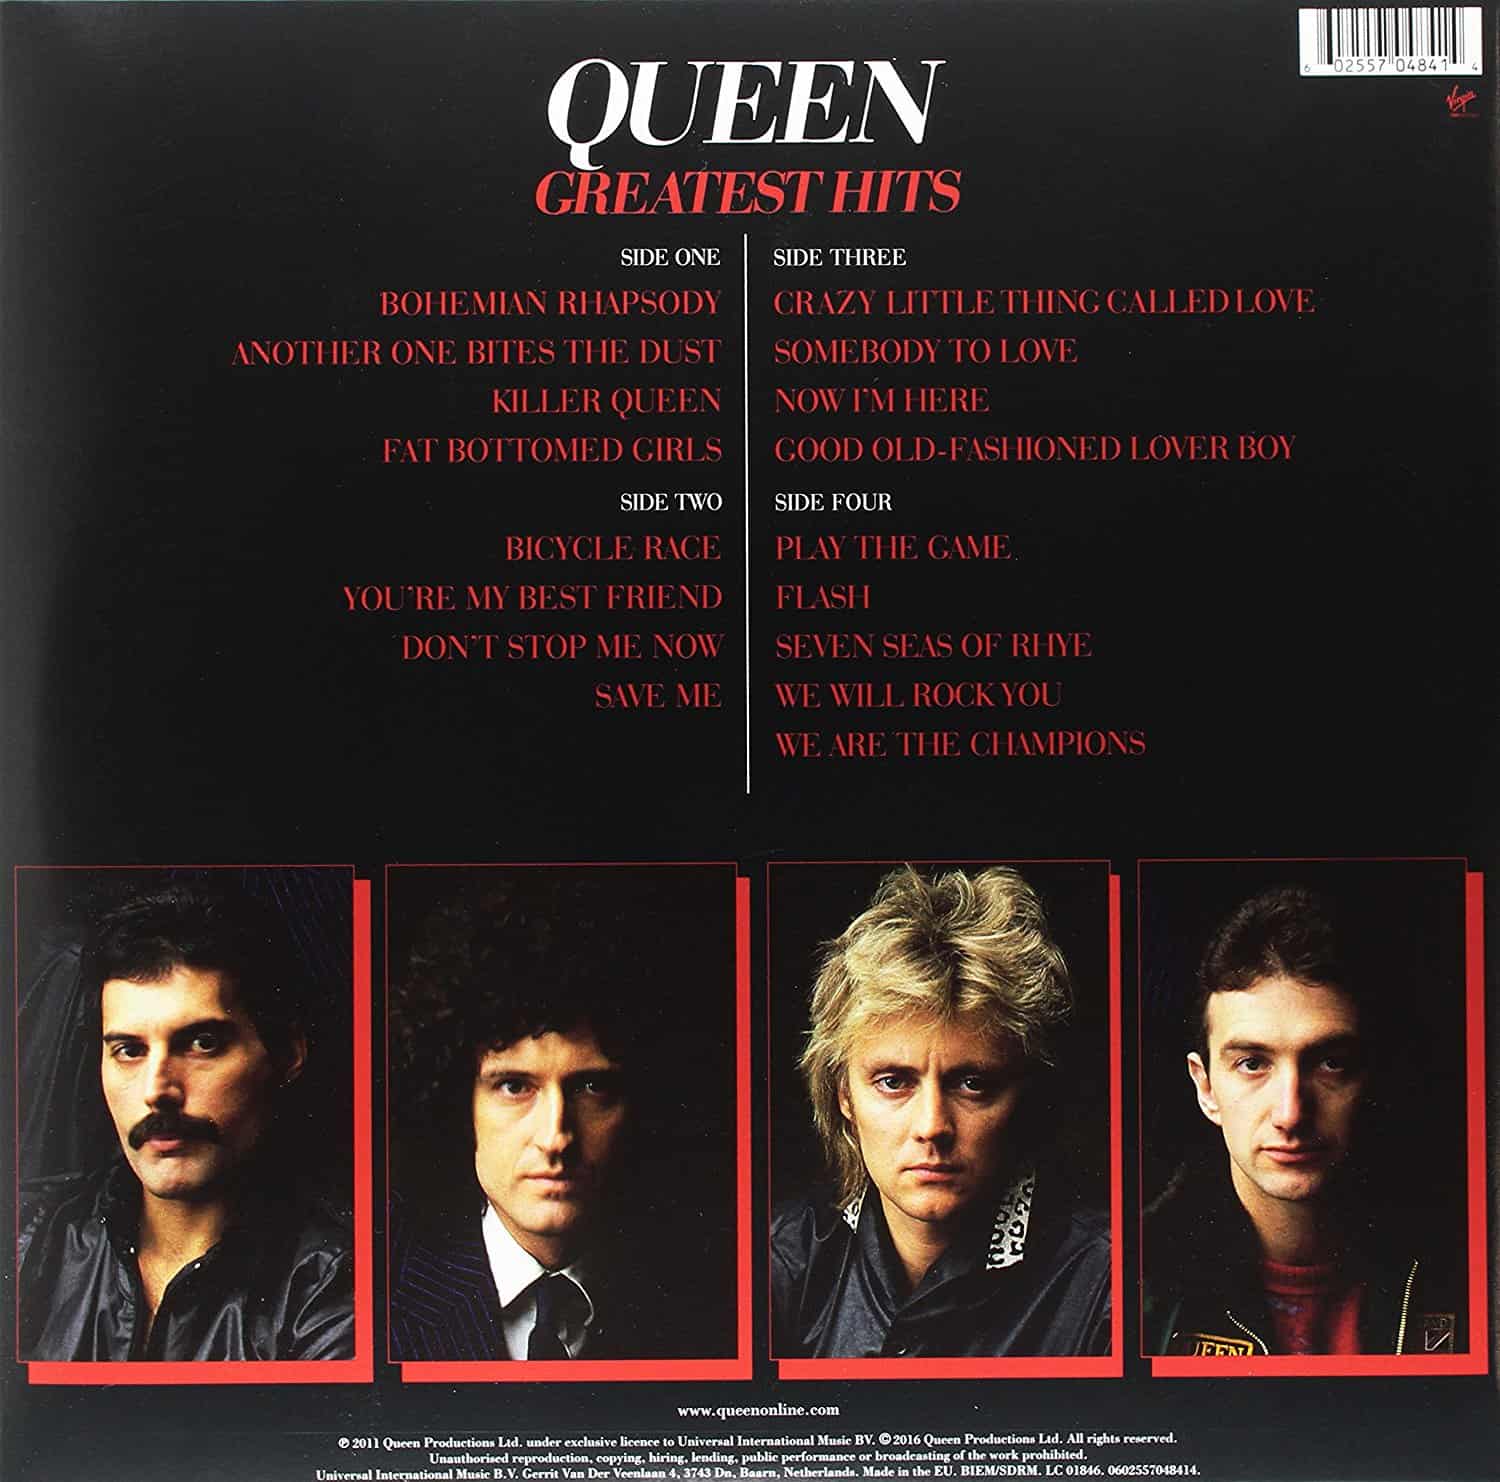 Queen-Greatest-Hits-vinyl-record-album-back